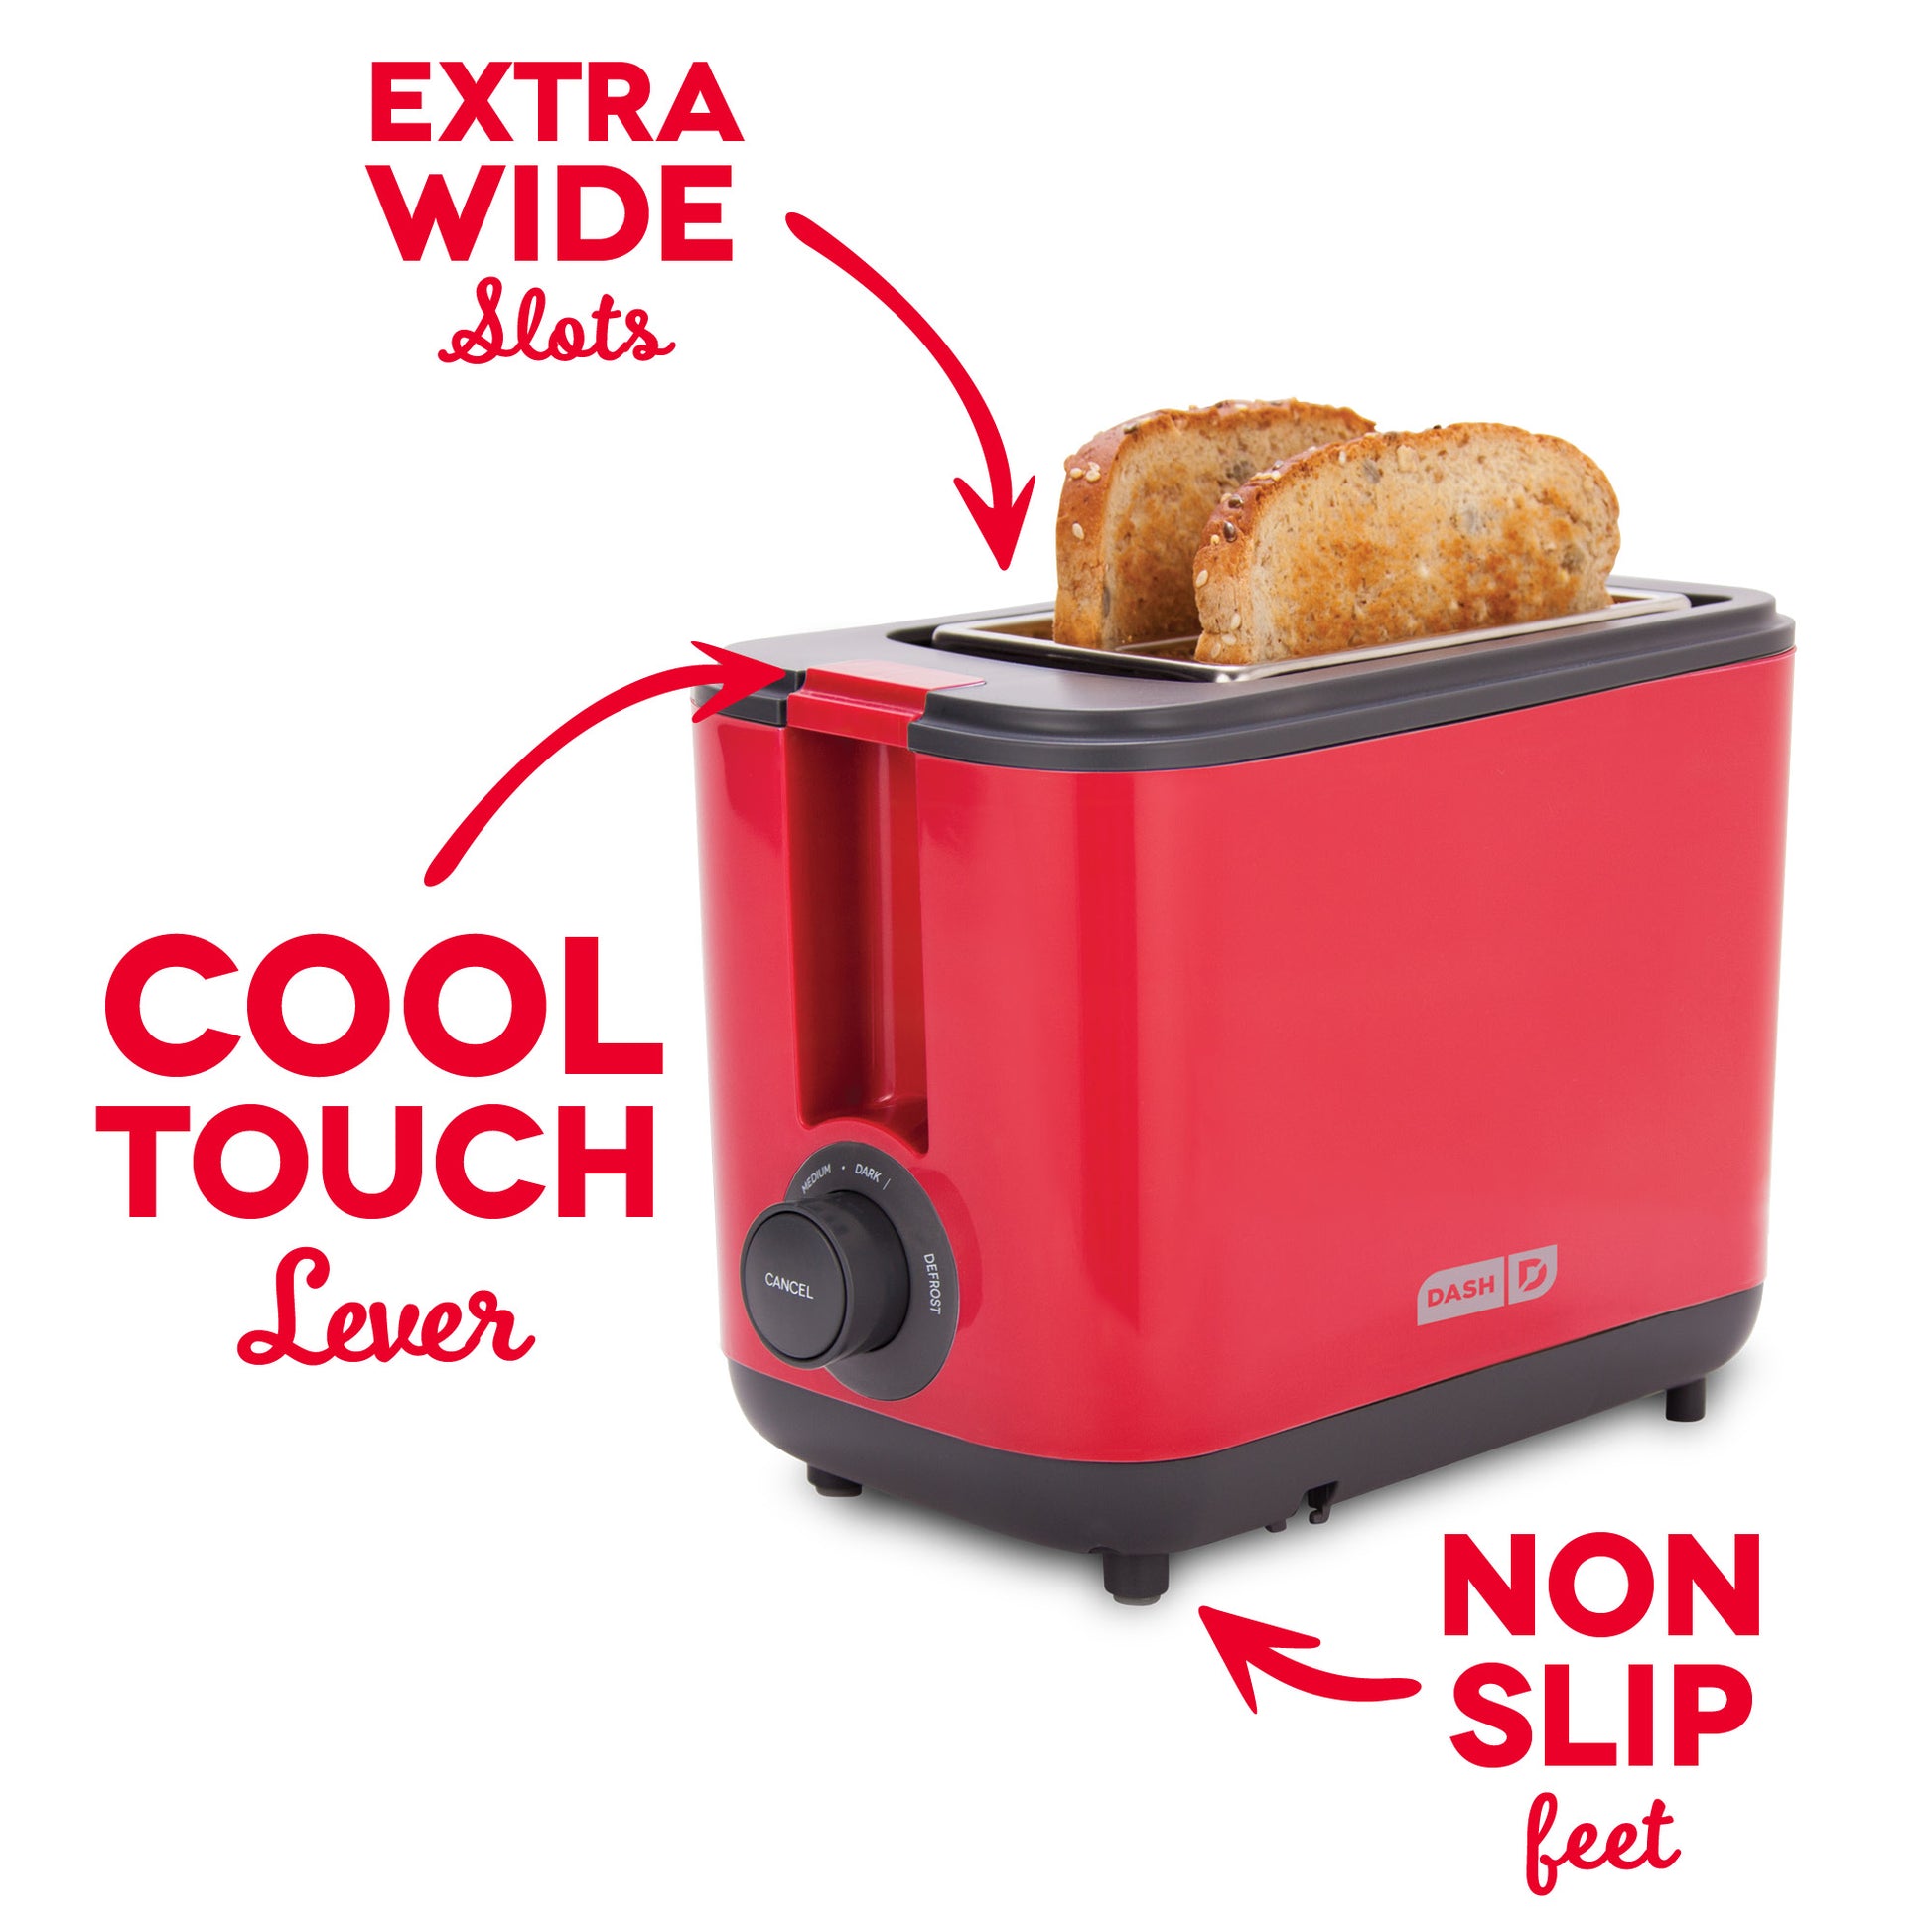 Dash 2-Slice Easy Toaster - Aqua